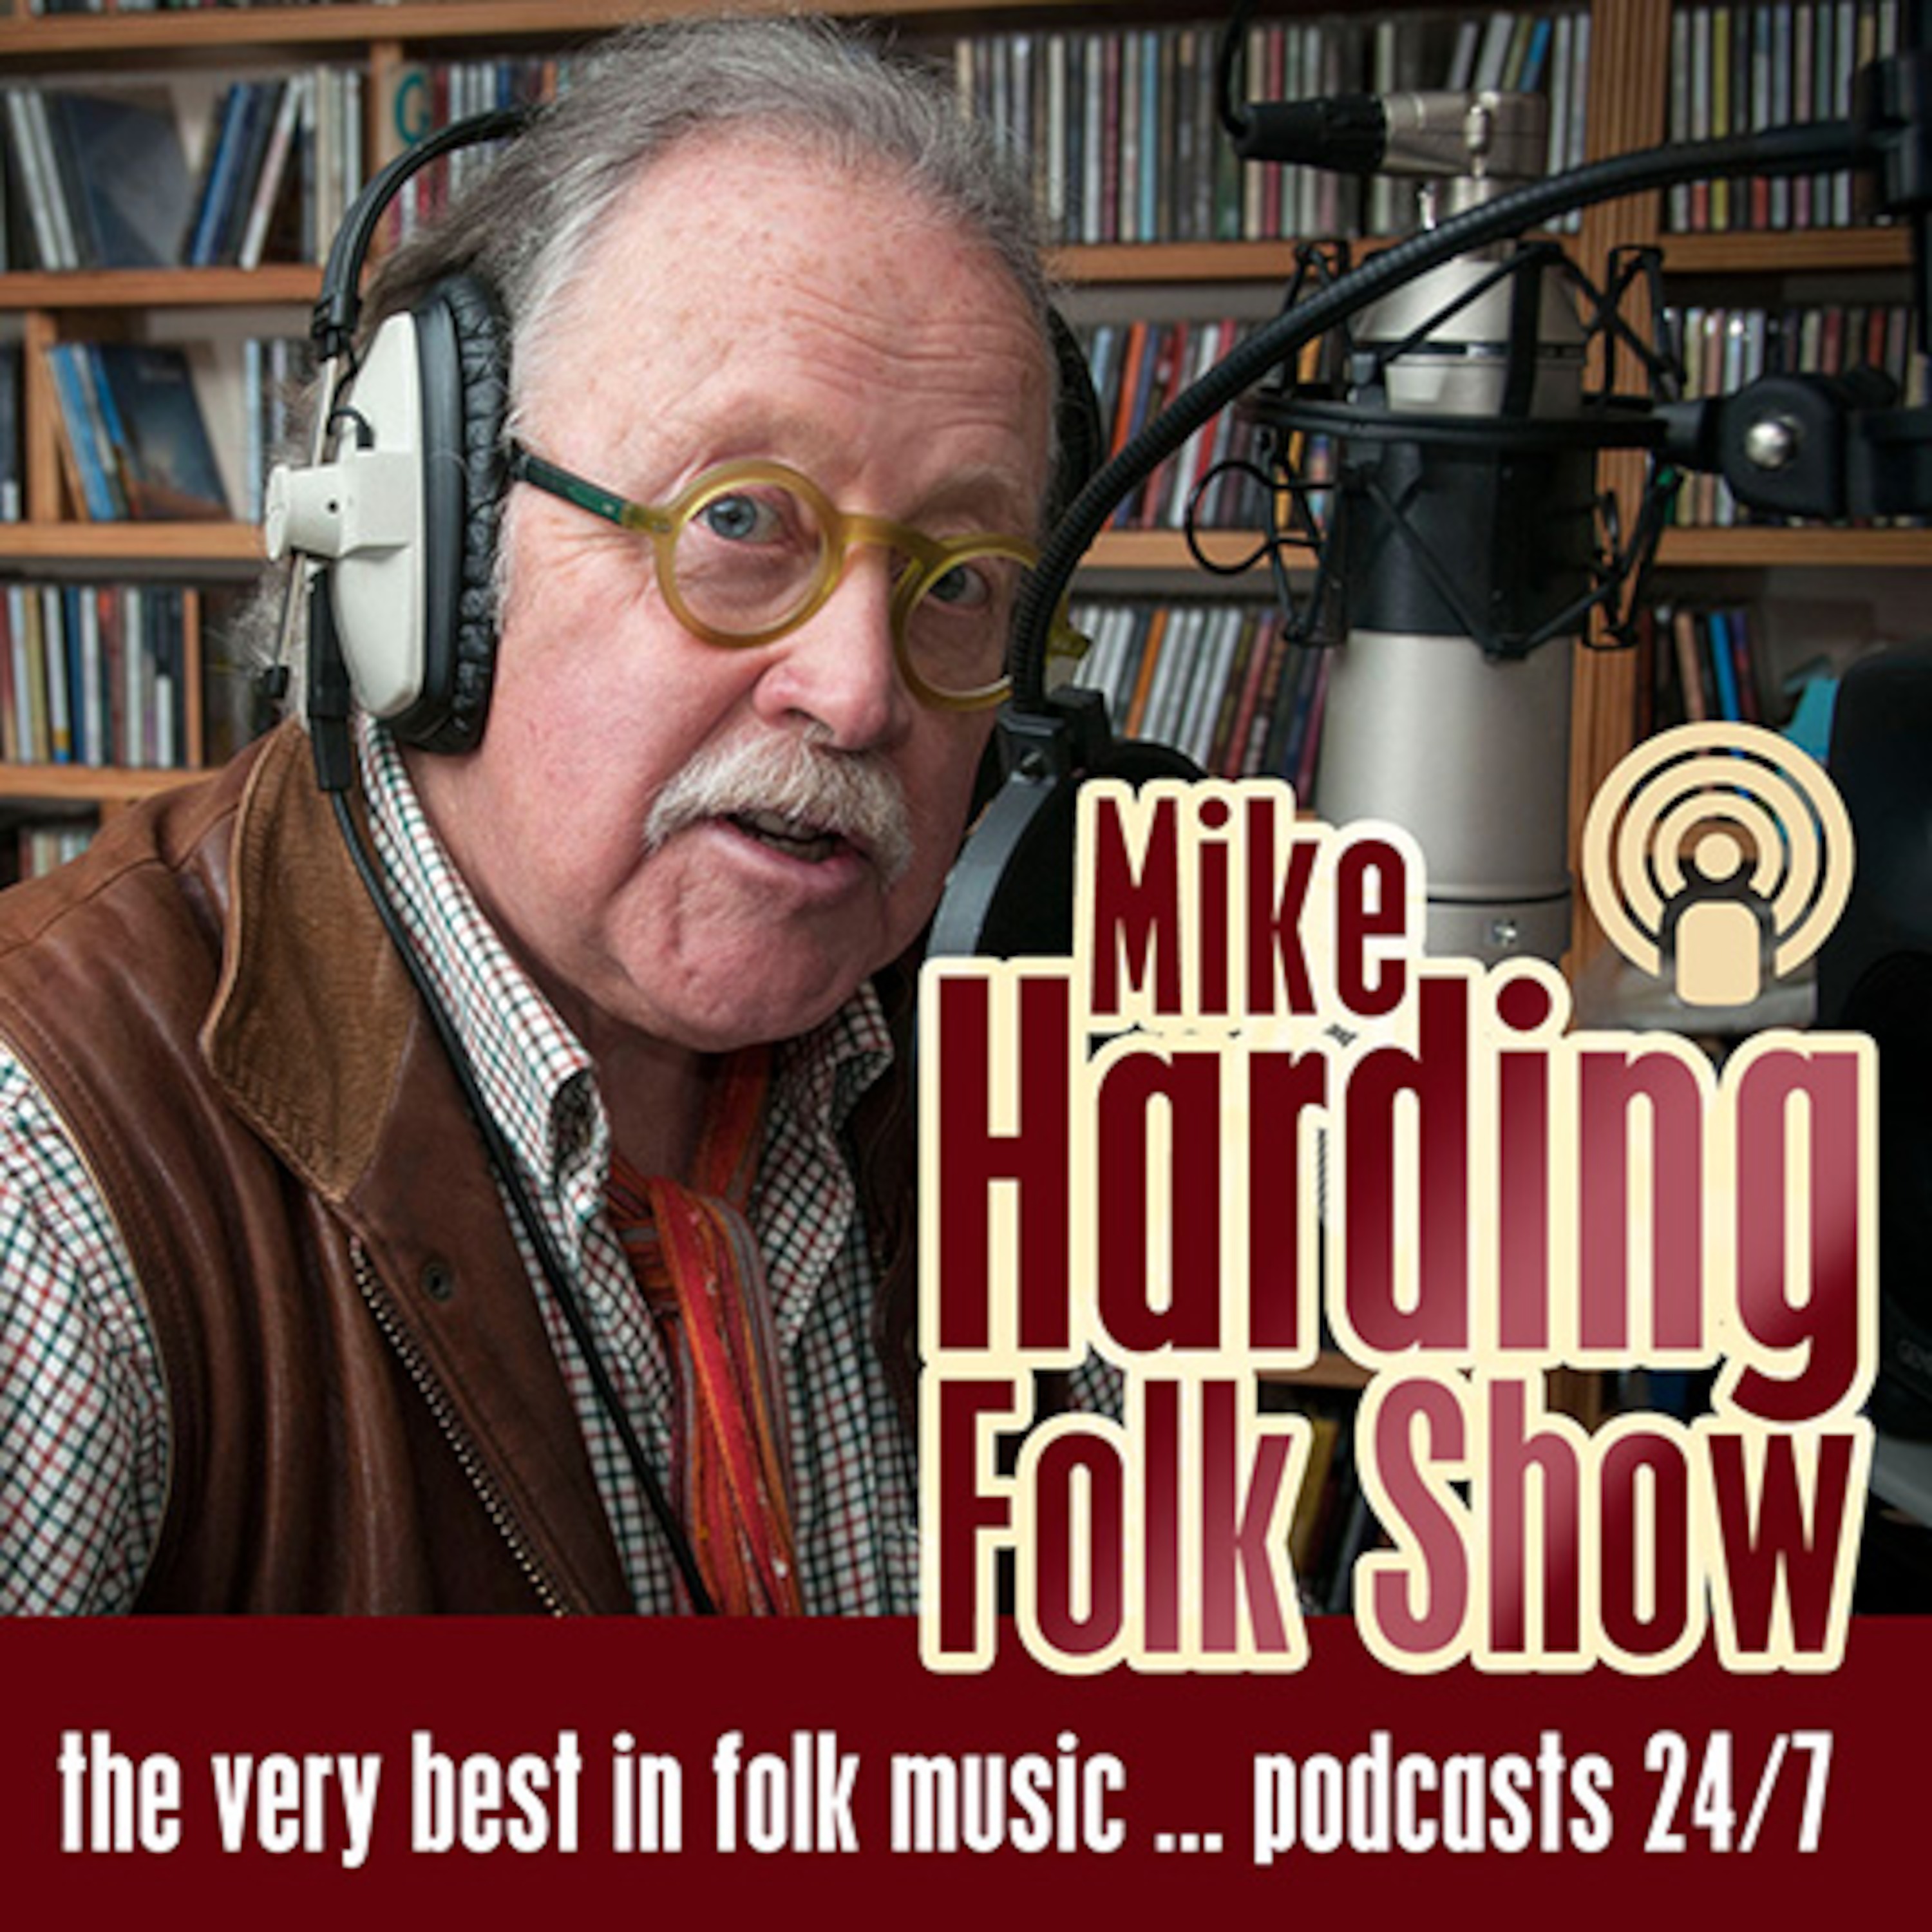 Mike Harding Folk Show 145